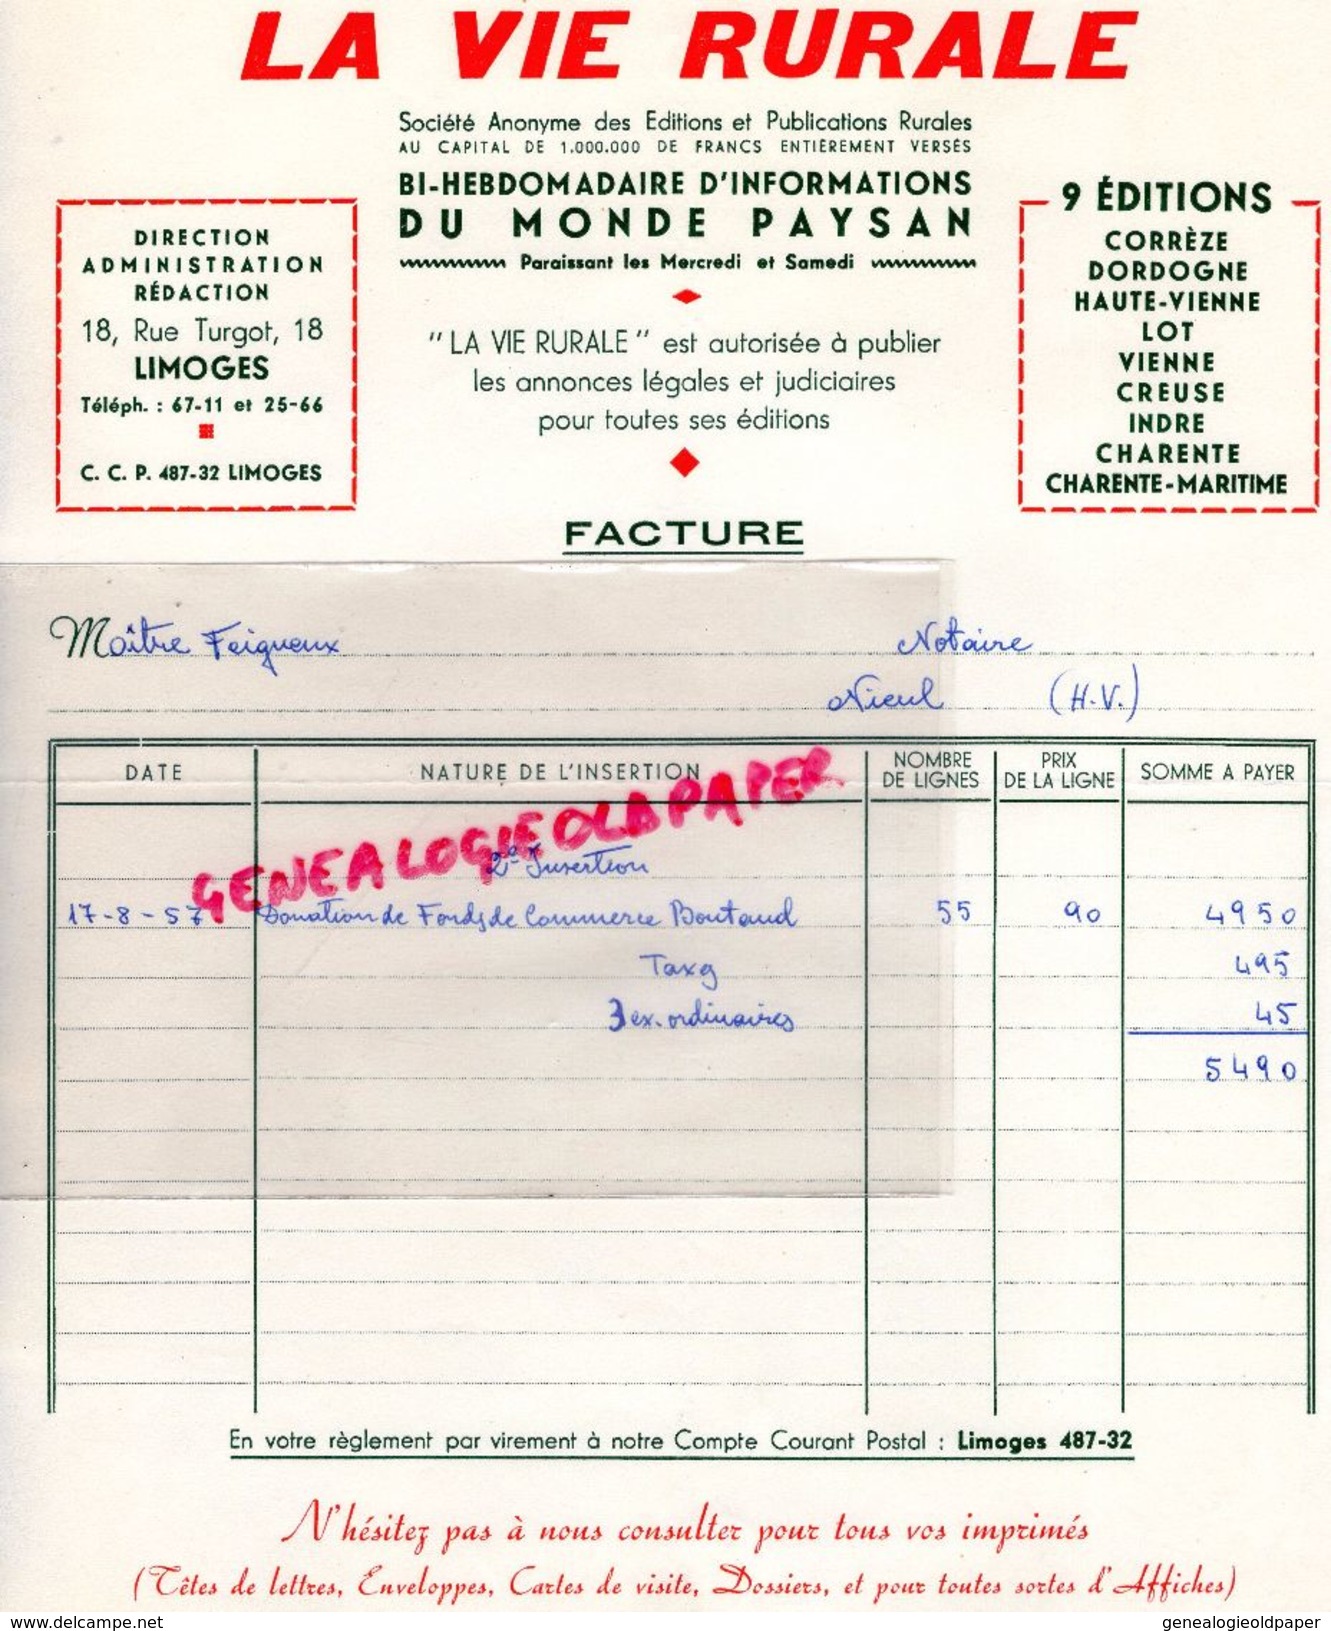 87 - LIMOGES - FACTURE LA VIE RURALE DU MONDE PAYSAN- PRESSE JOURNAL -18 RUE TURGOT- 1957 - Druck & Papierwaren